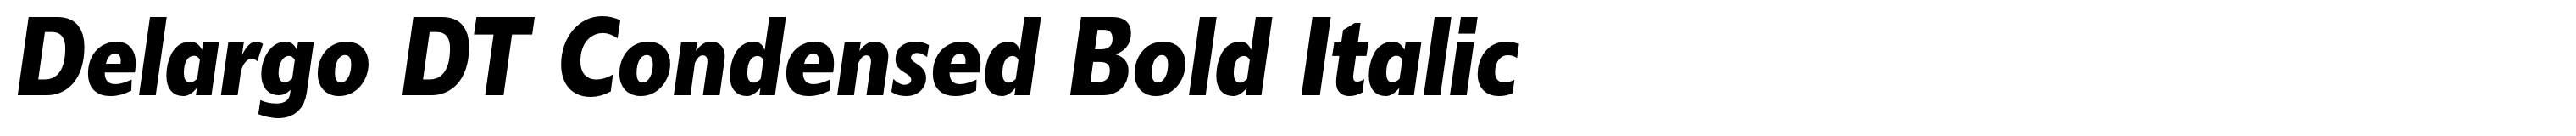 Delargo DT Condensed Bold Italic